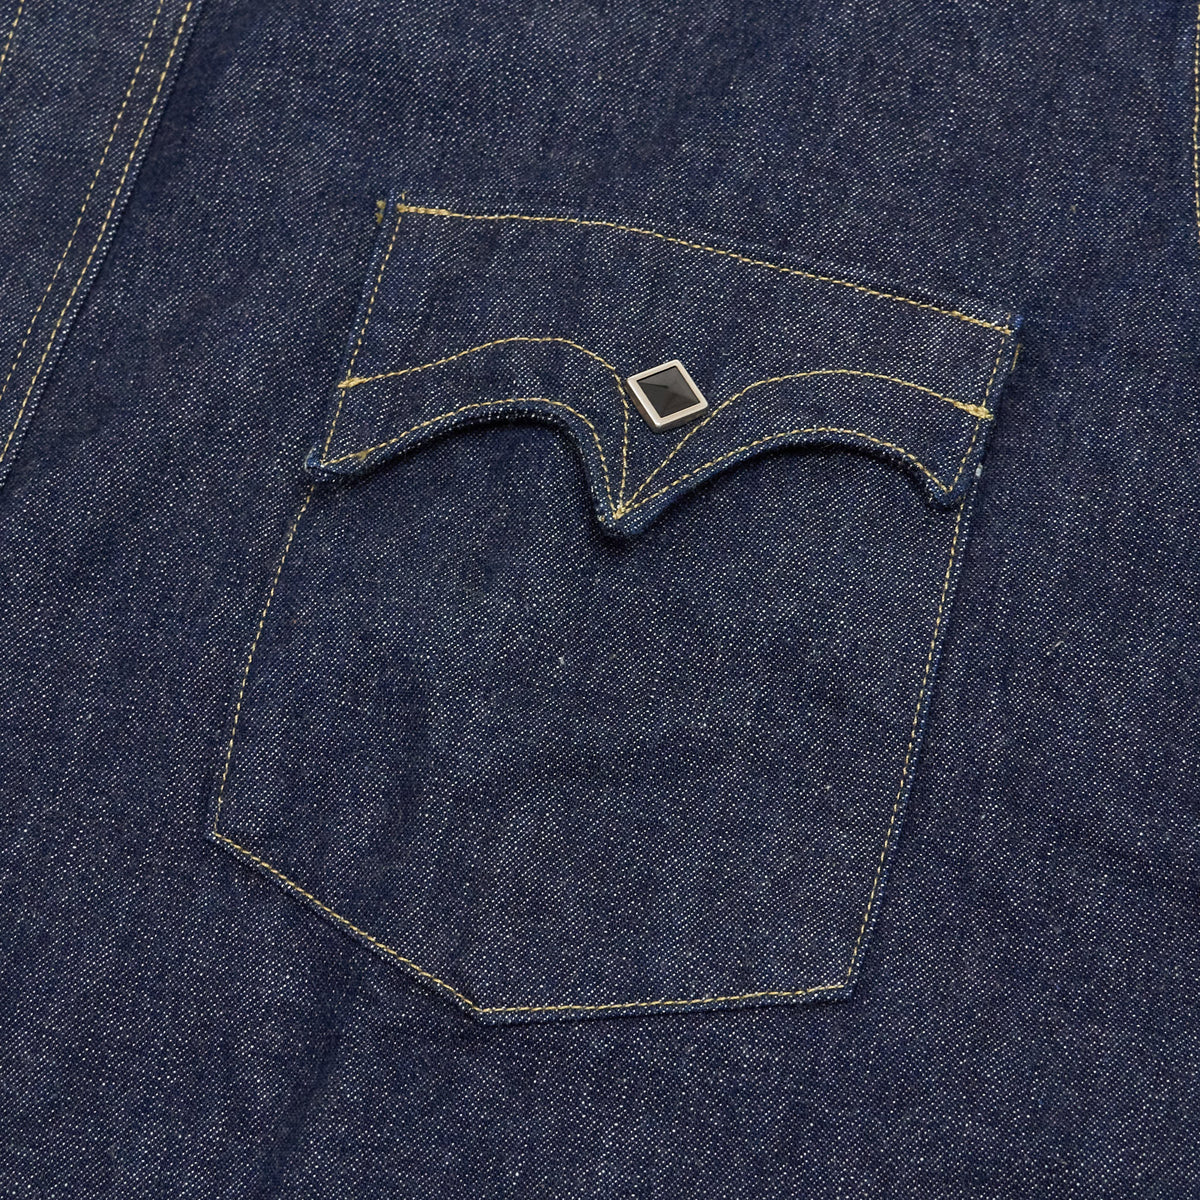 Samurai Jeans 10oz Western style Selvage Denim Jeans Shirt